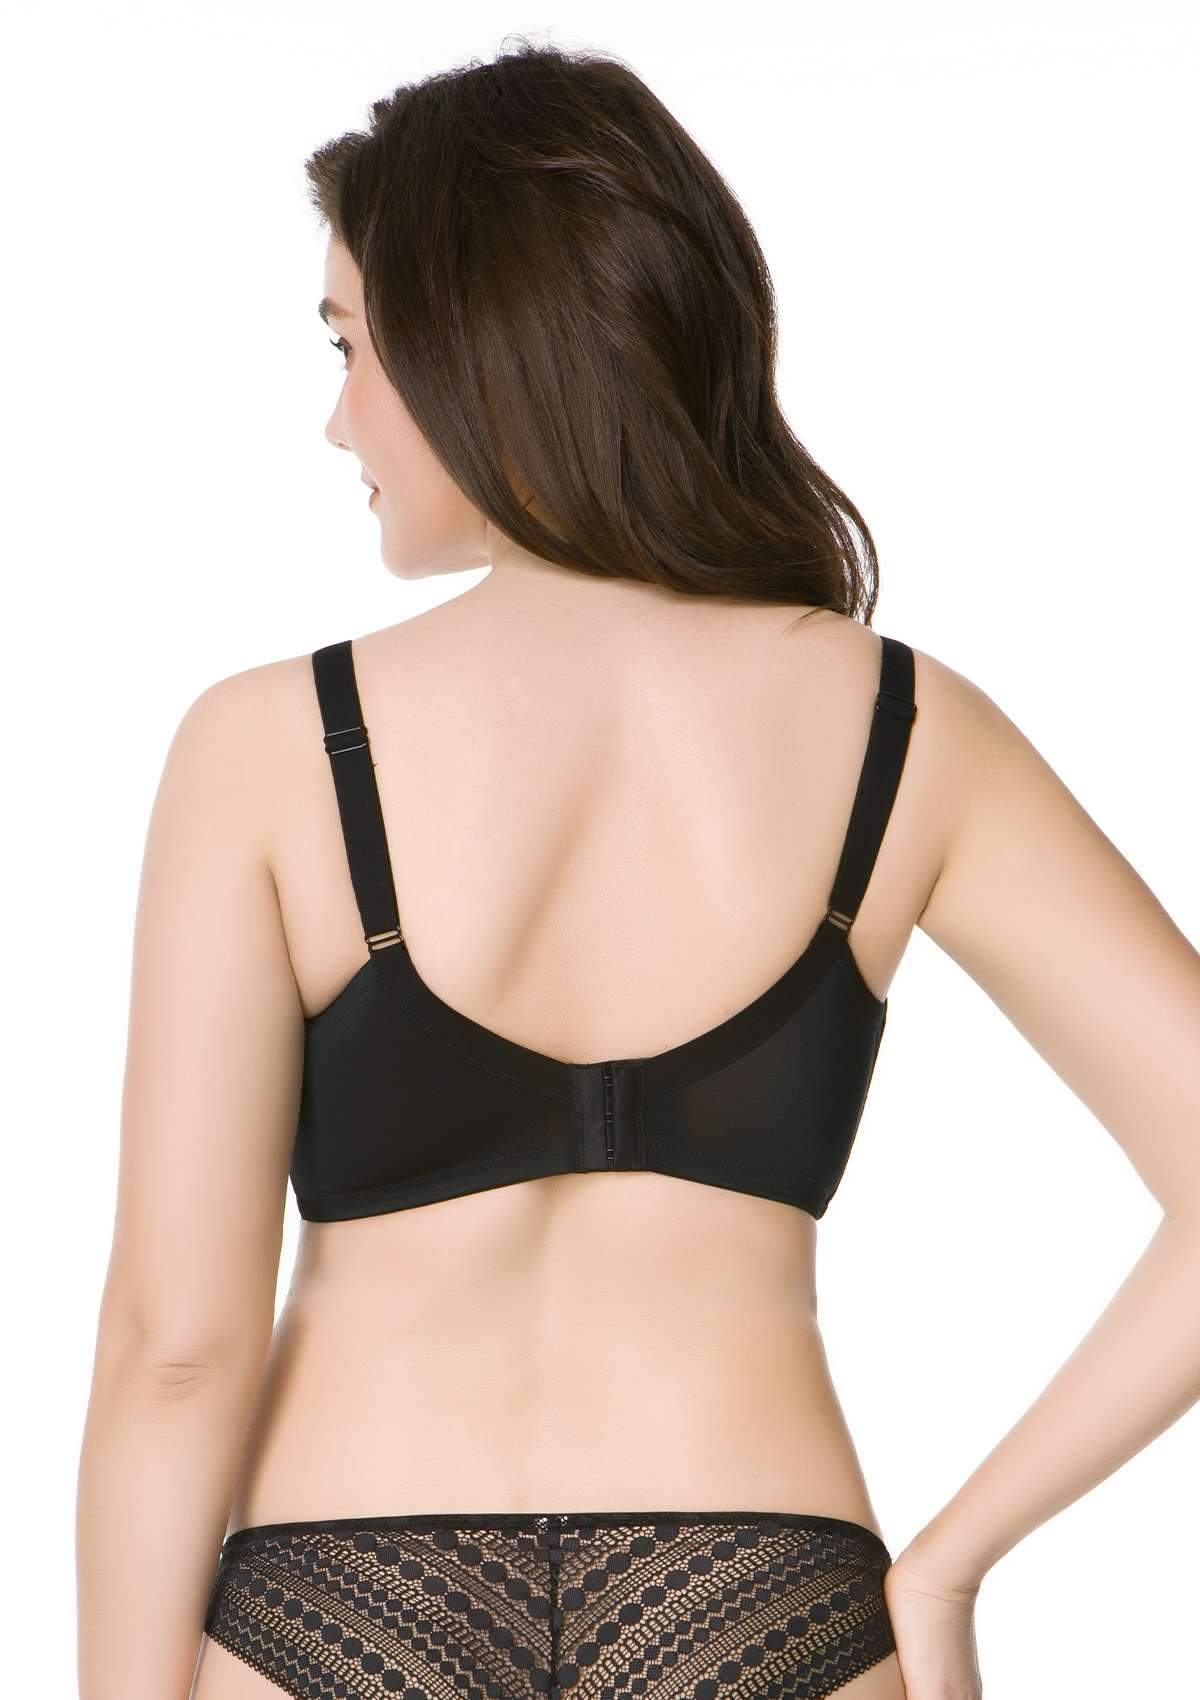 HSIA Heroine Matching Bra And Panties: Unlined Lace Unpadded Bra - Black / 42 / DDD/F